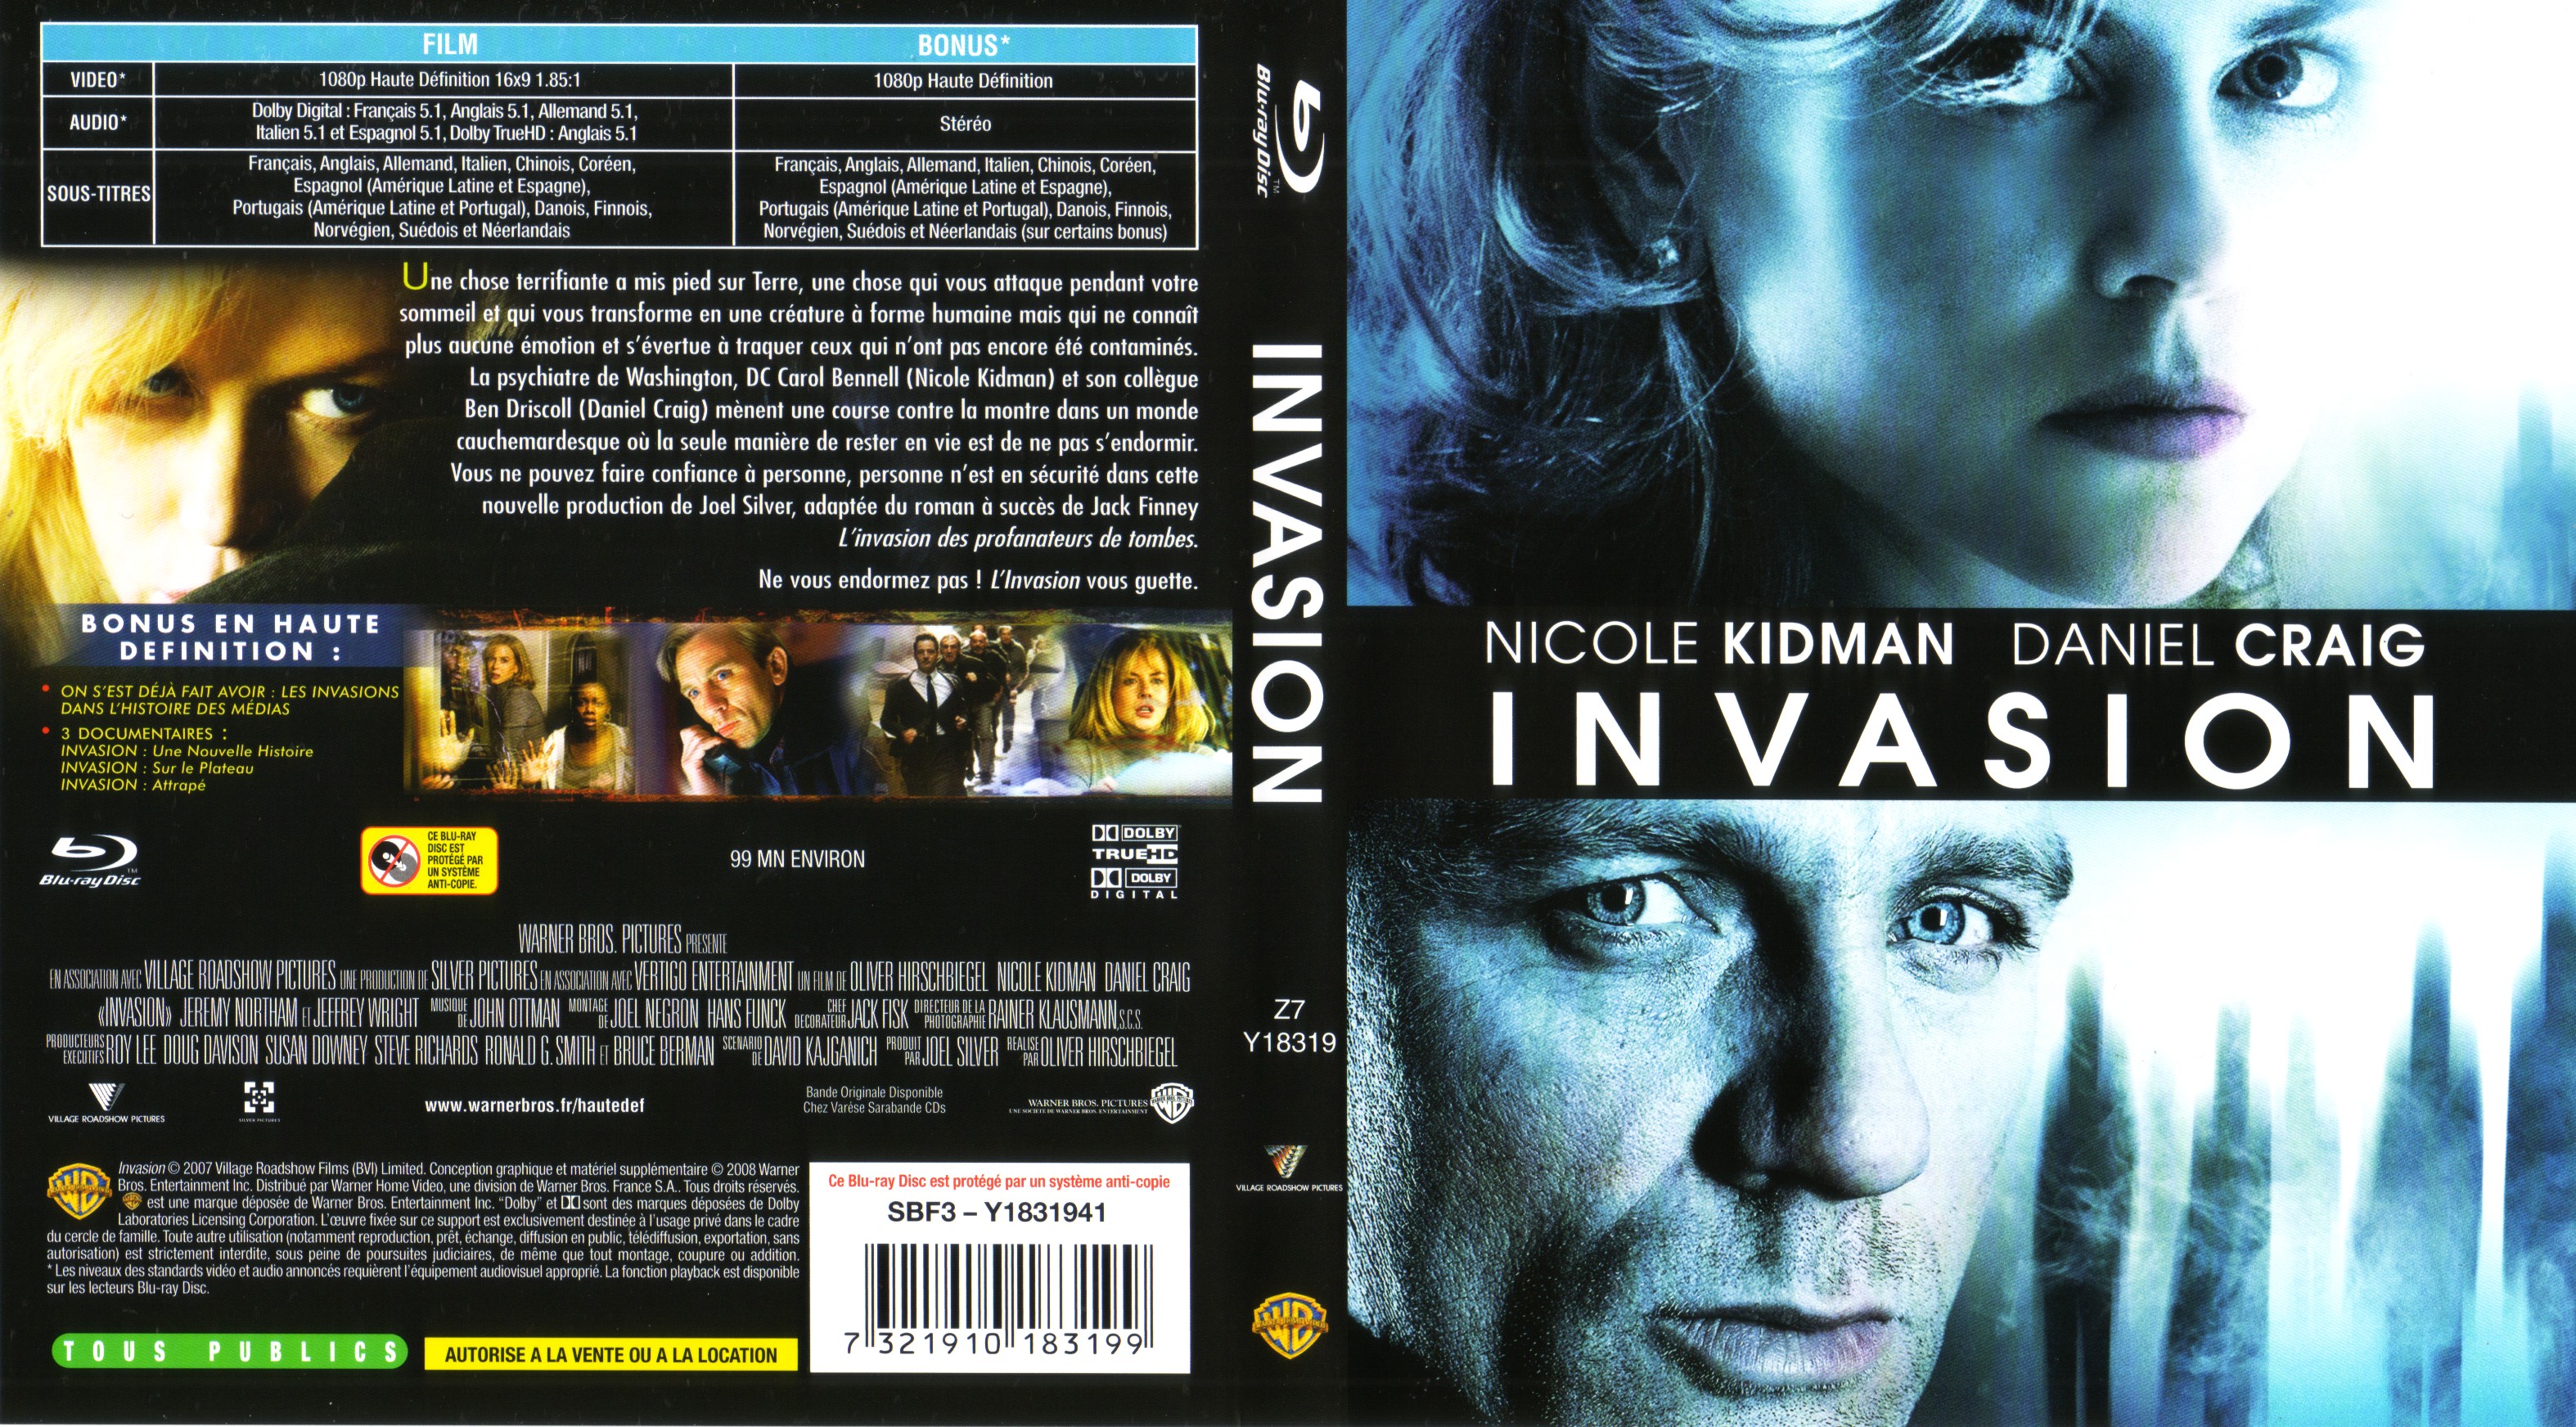 Jaquette DVD Invasion (BLU-RAY) v2